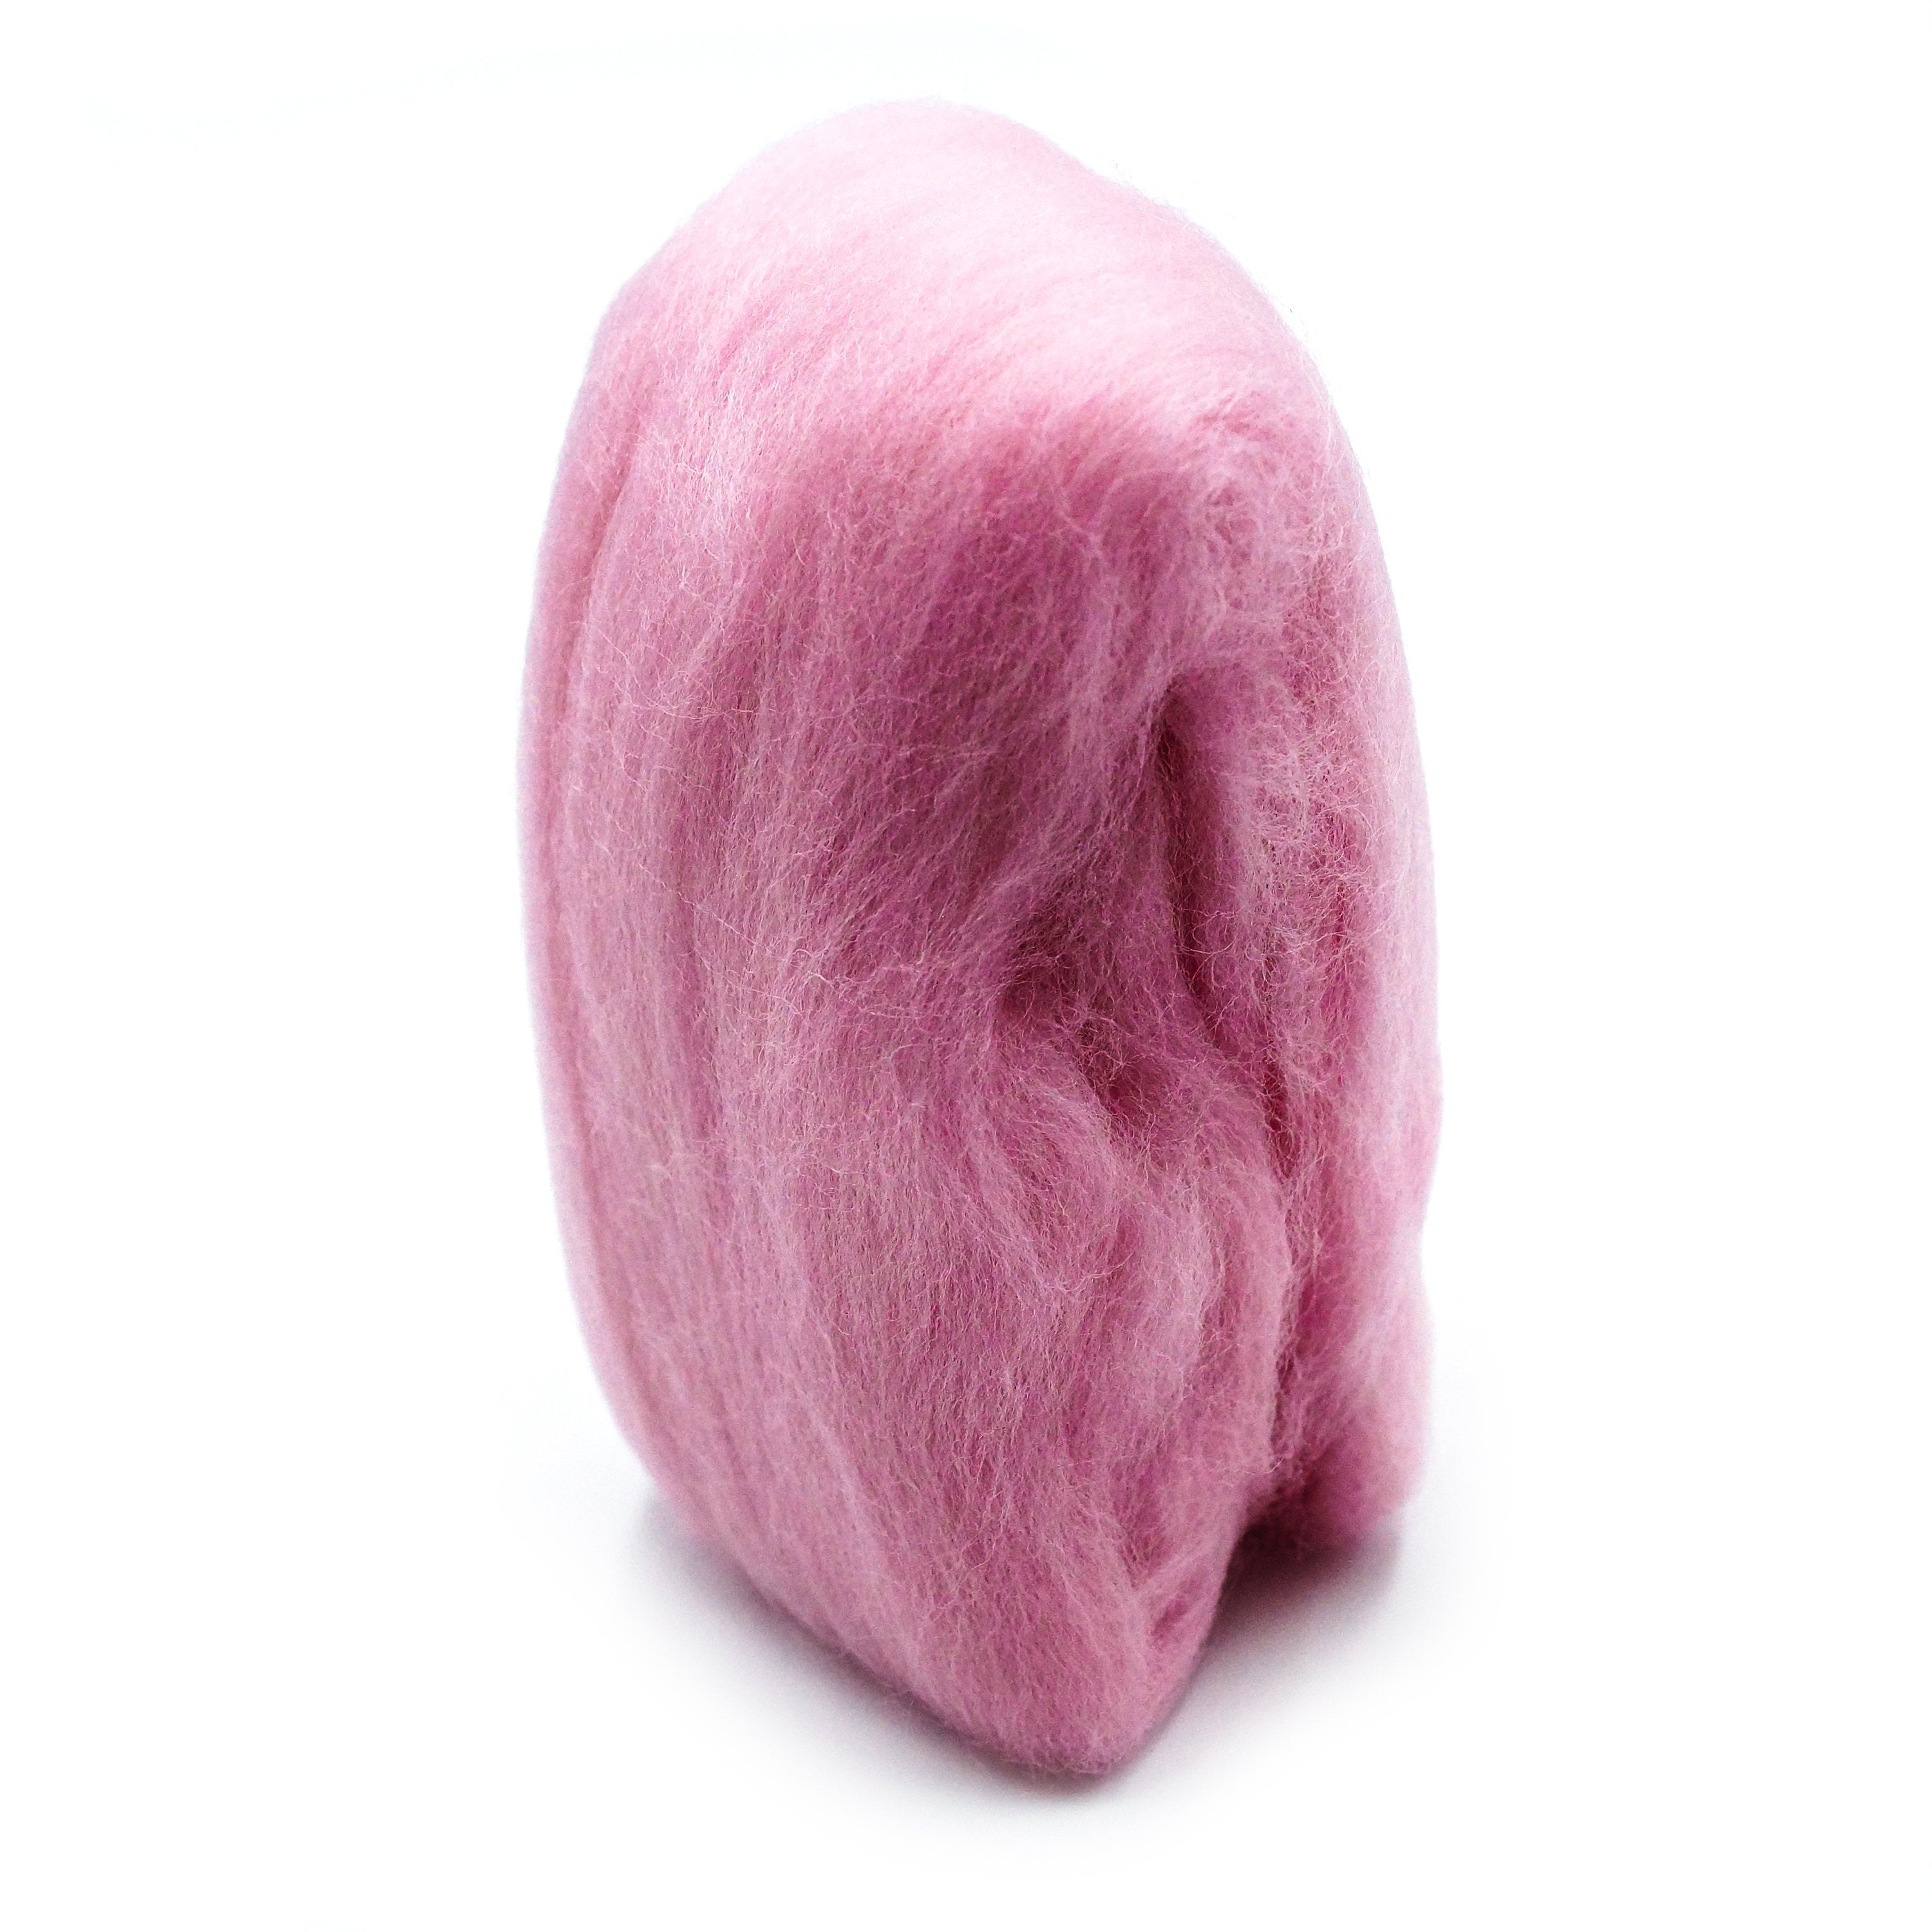 National Nonwovens Wool Felt - 20% - 12-inch x 18-inch - Pink